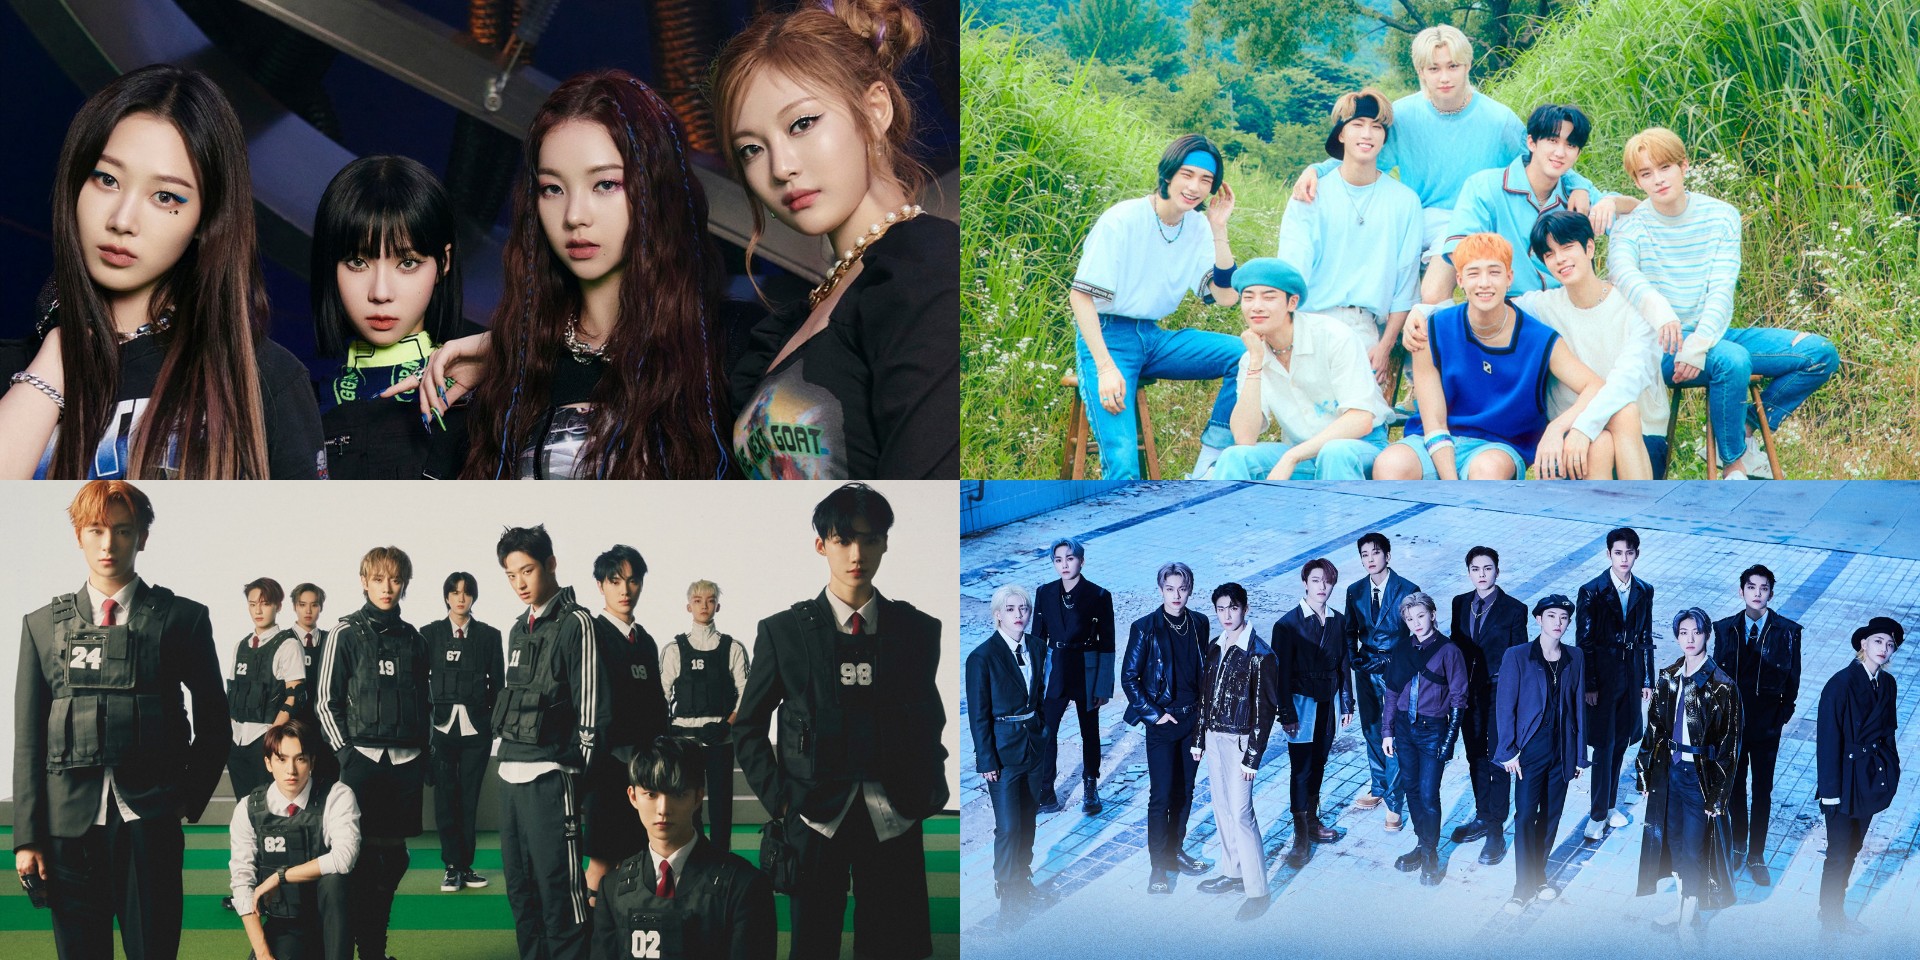 2021 Asia Artist Awards announces lineup: SEVENTEEN, Stray Kids, THE BOYZ, aespa, and more